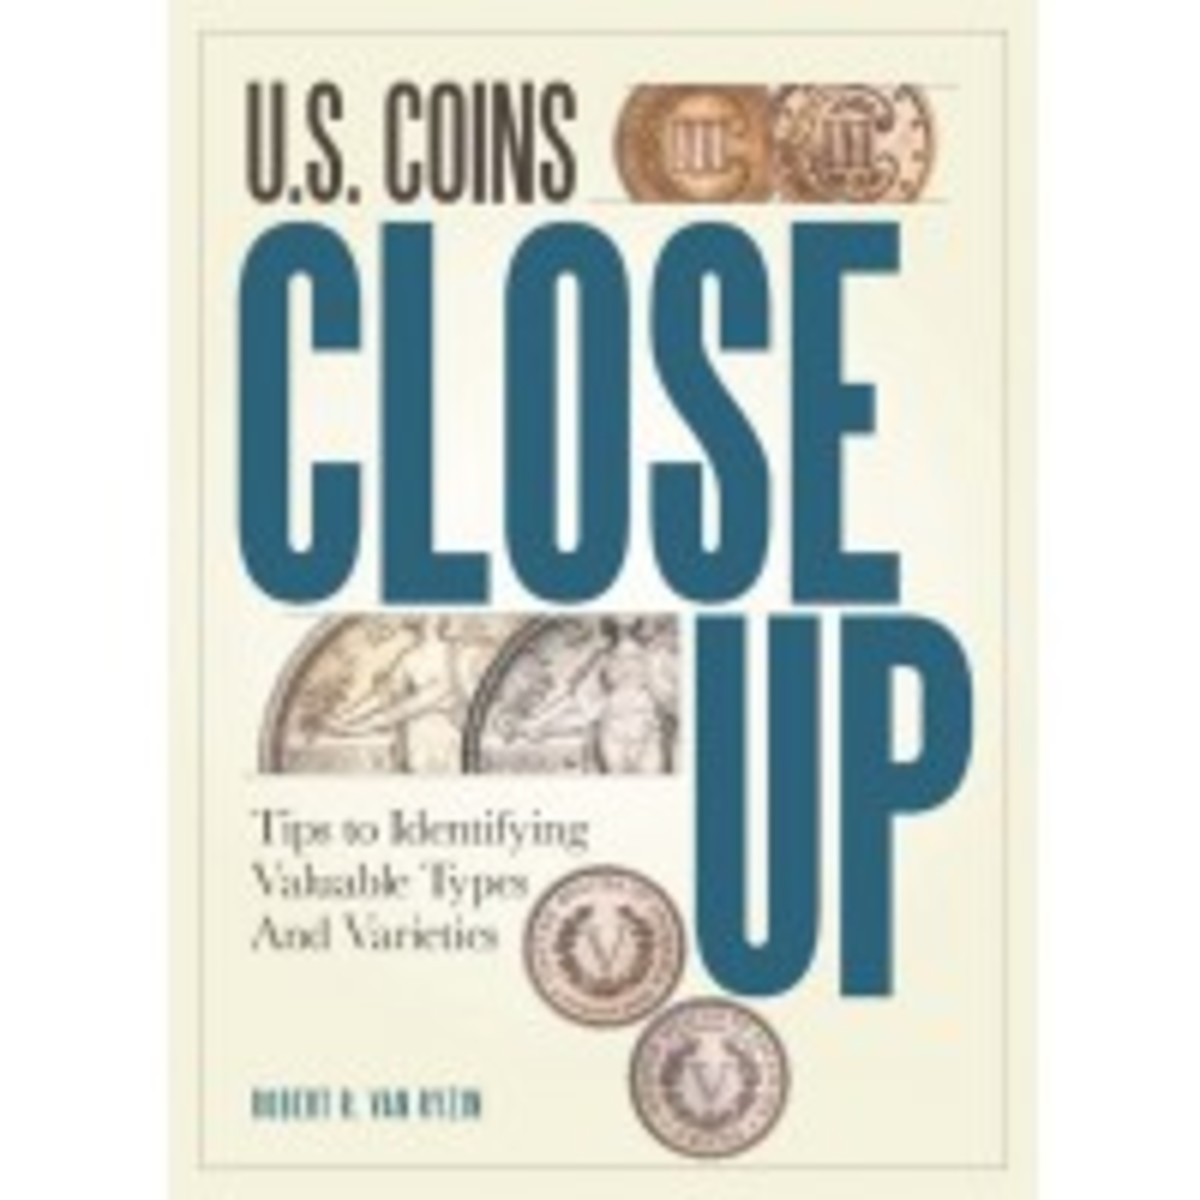 See detailed images of U.S. coins in Robert VanRyzin's U.S. Coins Close Up.